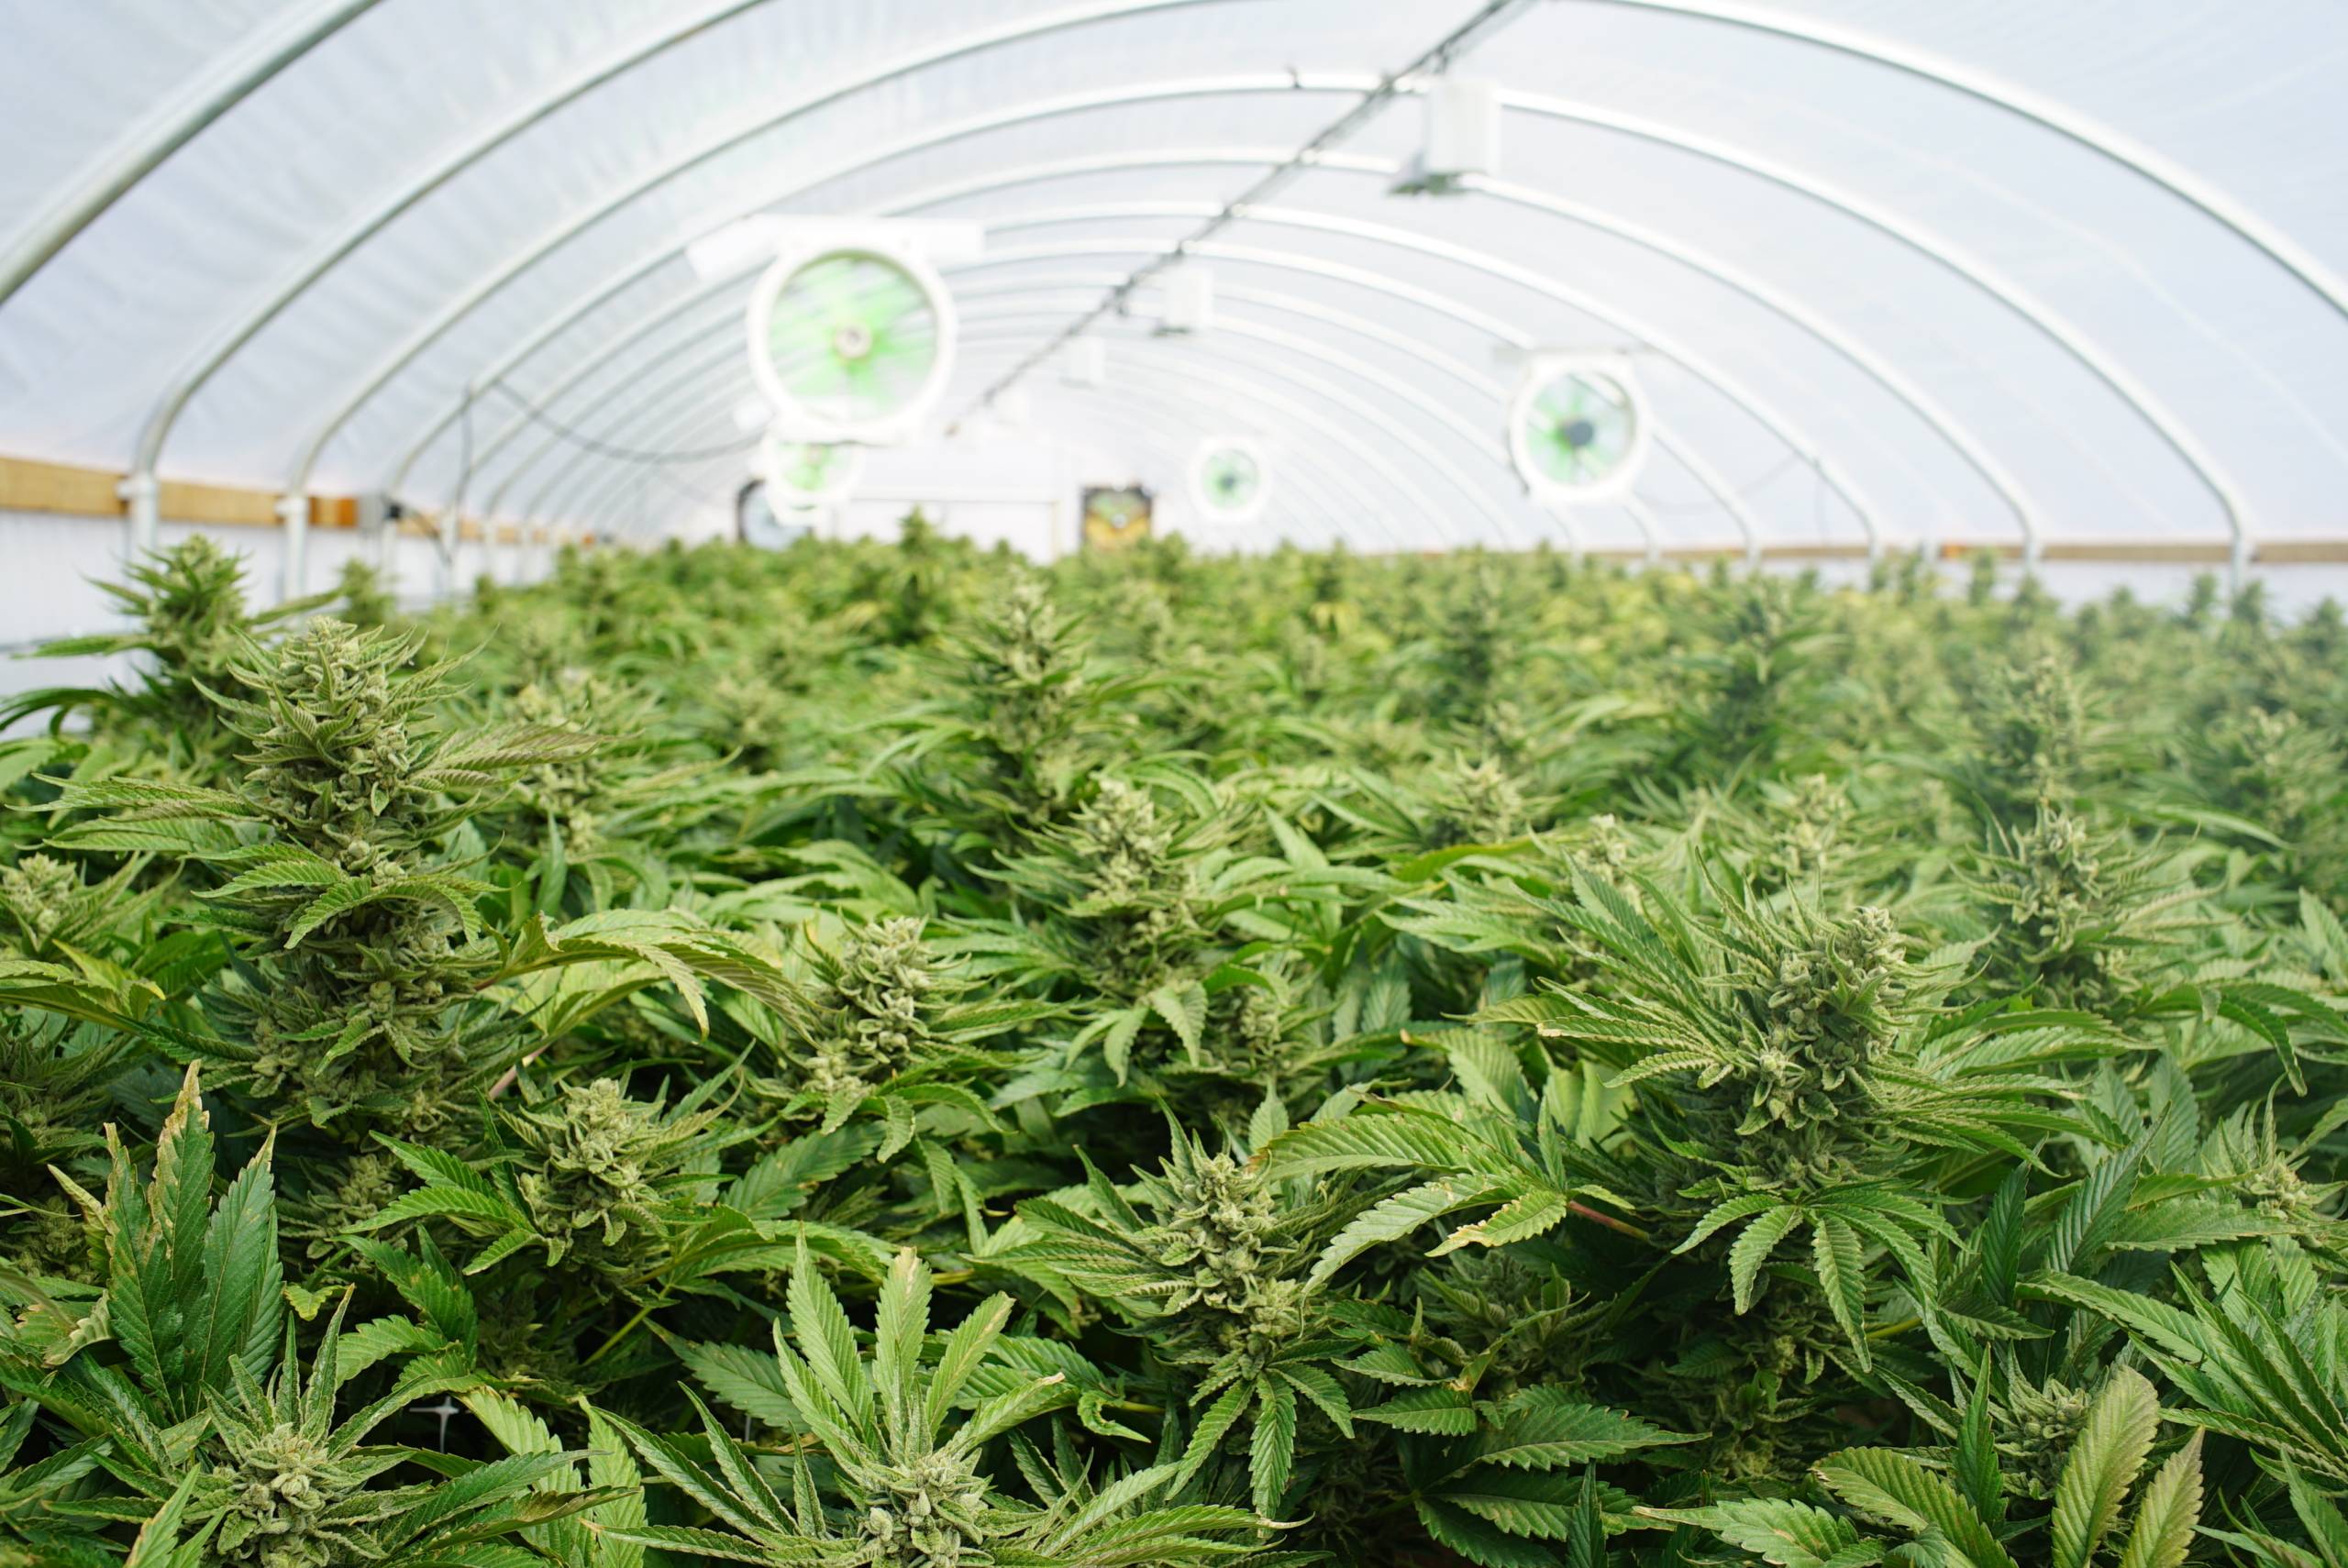 Large Indoor Marijuana Commercial Growing Operation With Fans. SpeedGreens